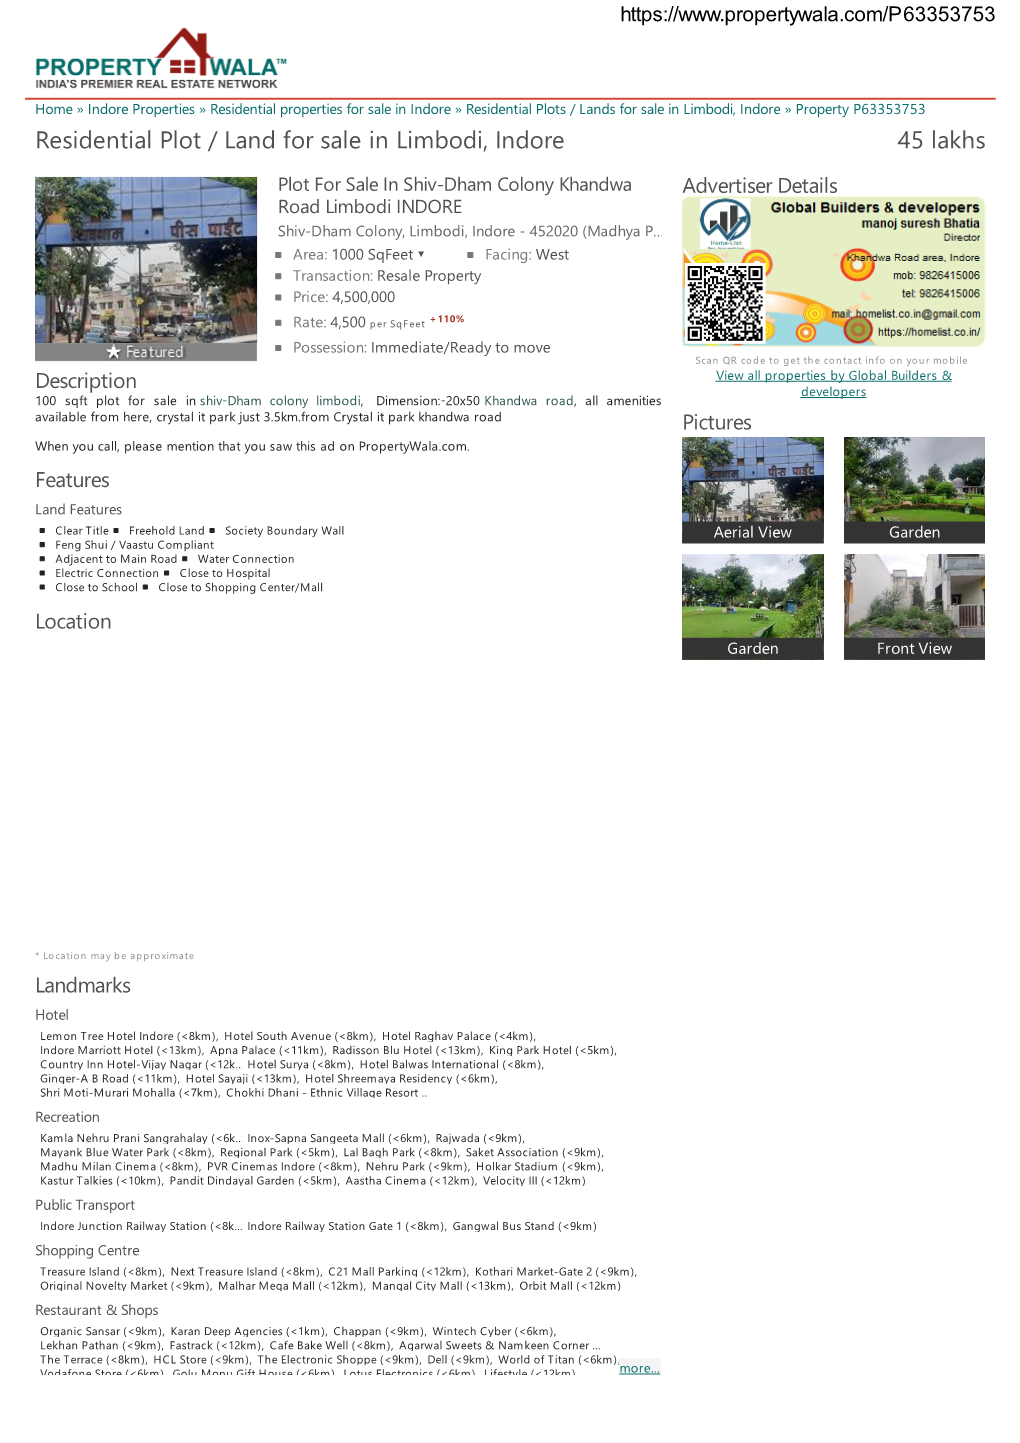 Residential Plot / Land for Sale in Limbodi, Indore (P63353753